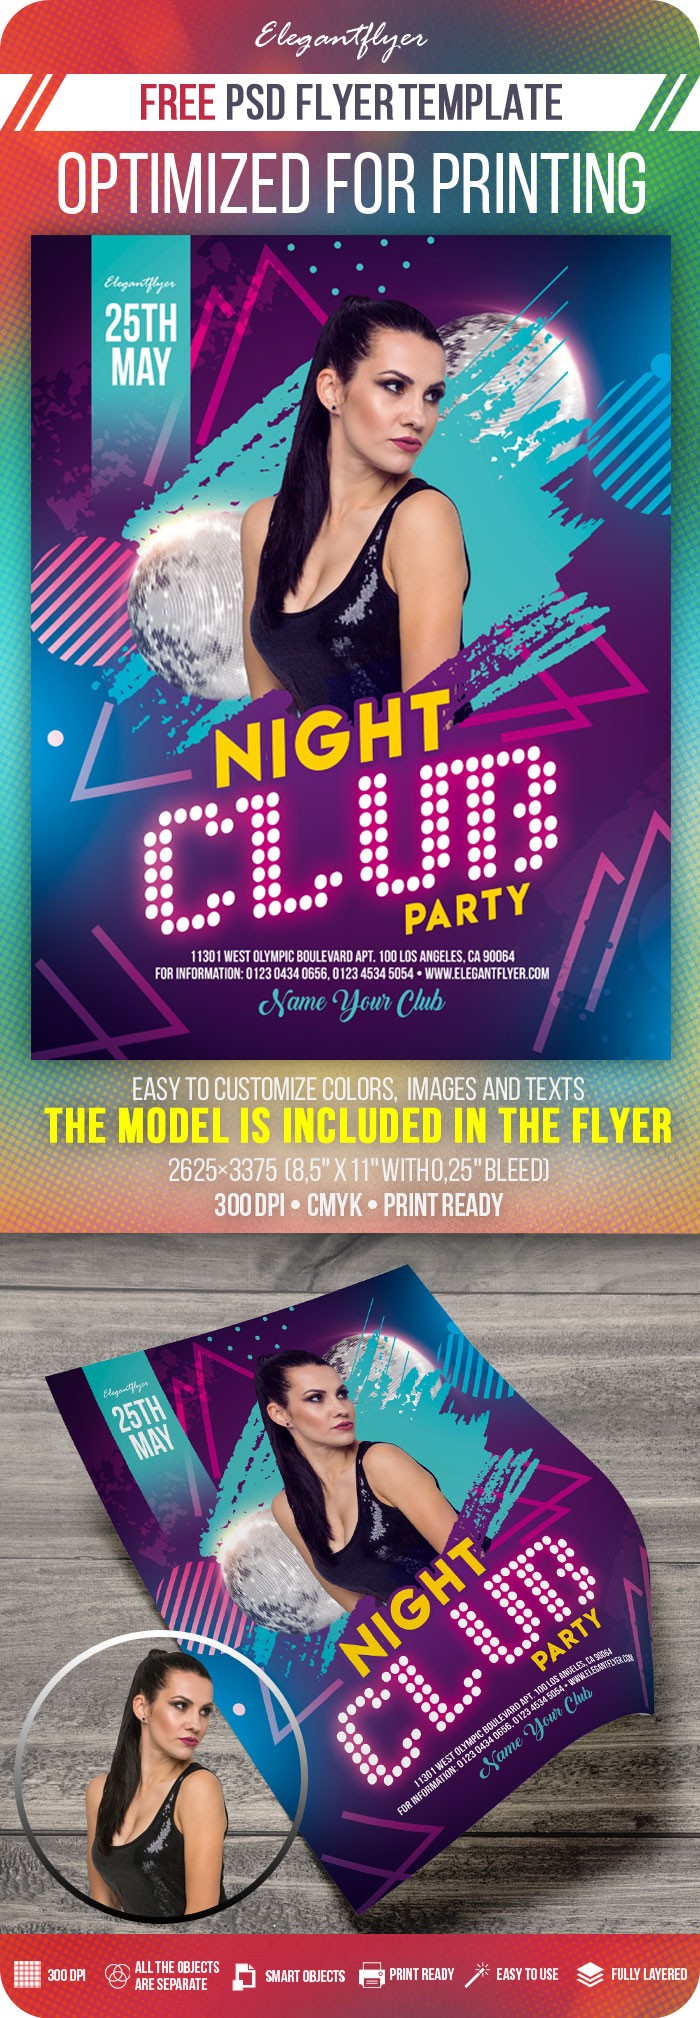 Fiesta de Club Nocturno by ElegantFlyer